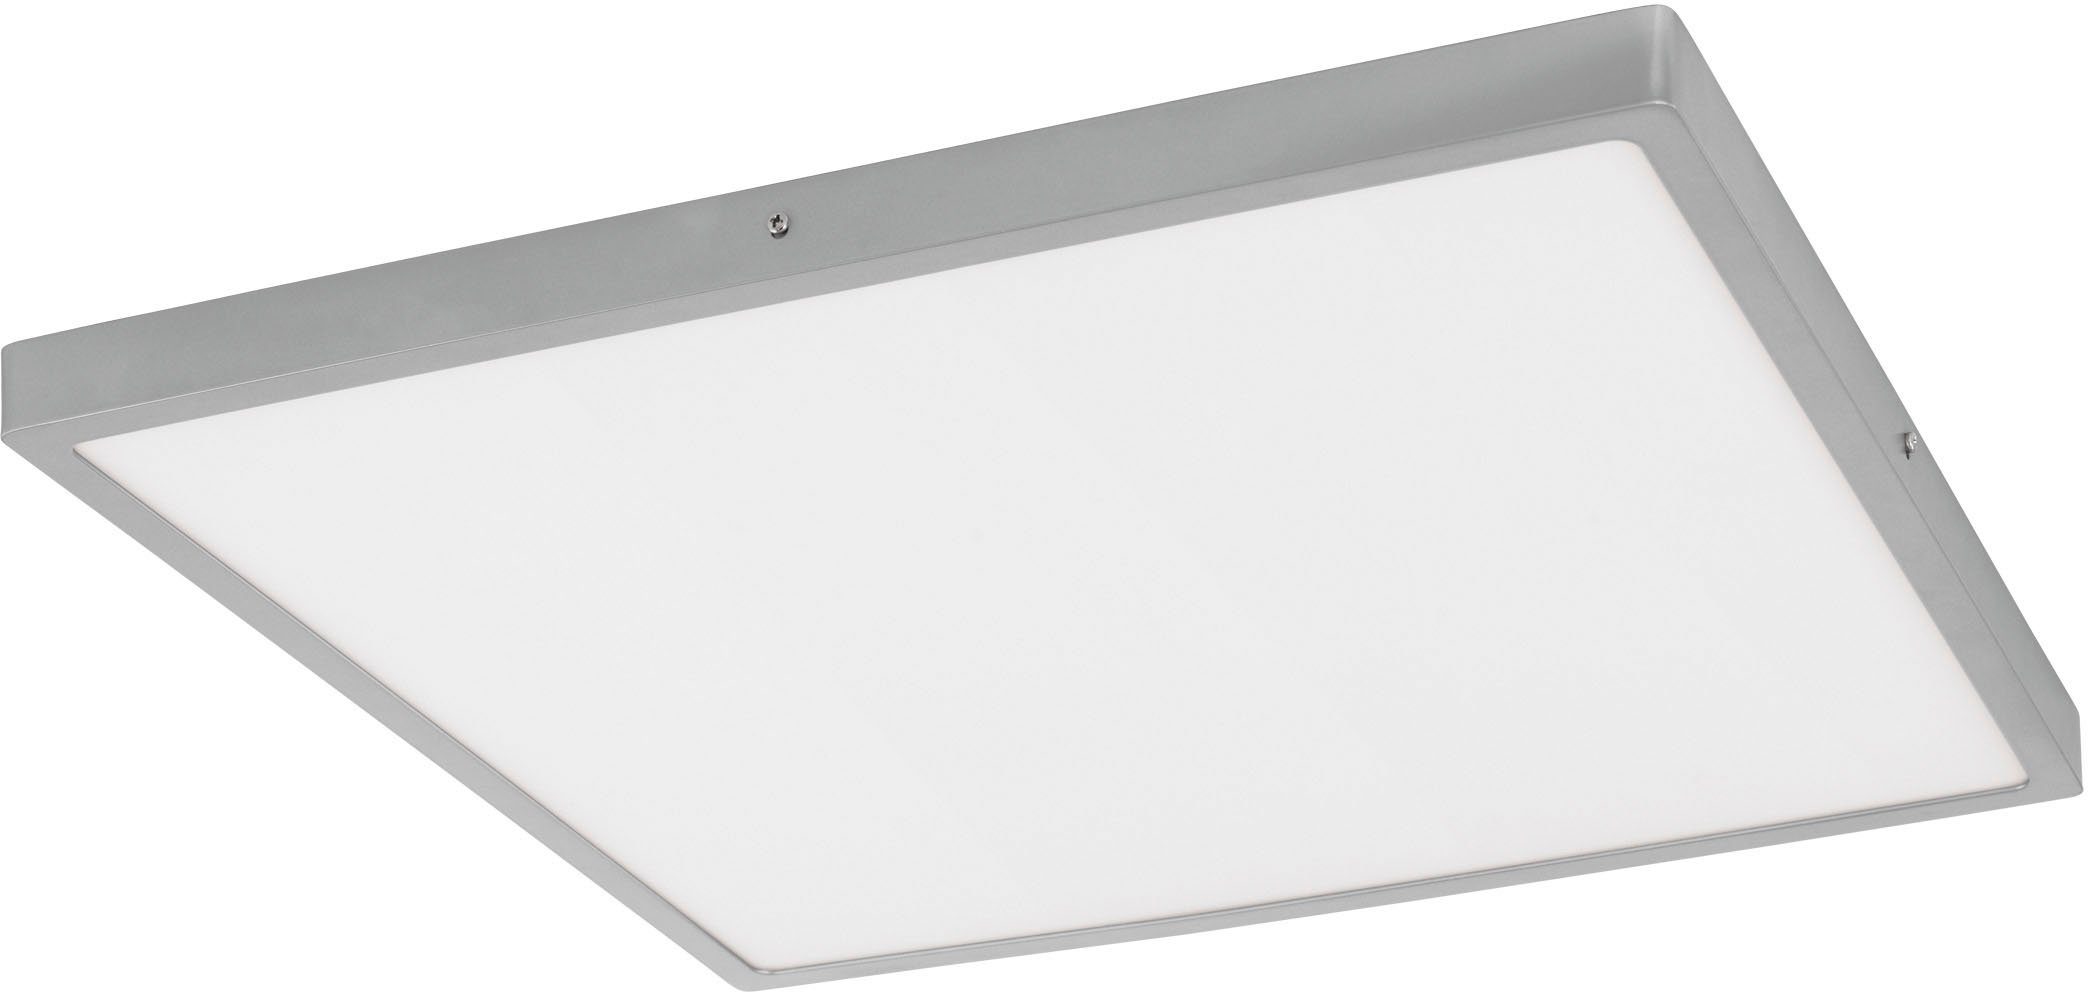 EGLO LED Panel FUEVA 1, LED fest integriert, Warmweiß, schlankes Design, nur 3 cm hoch | Panels